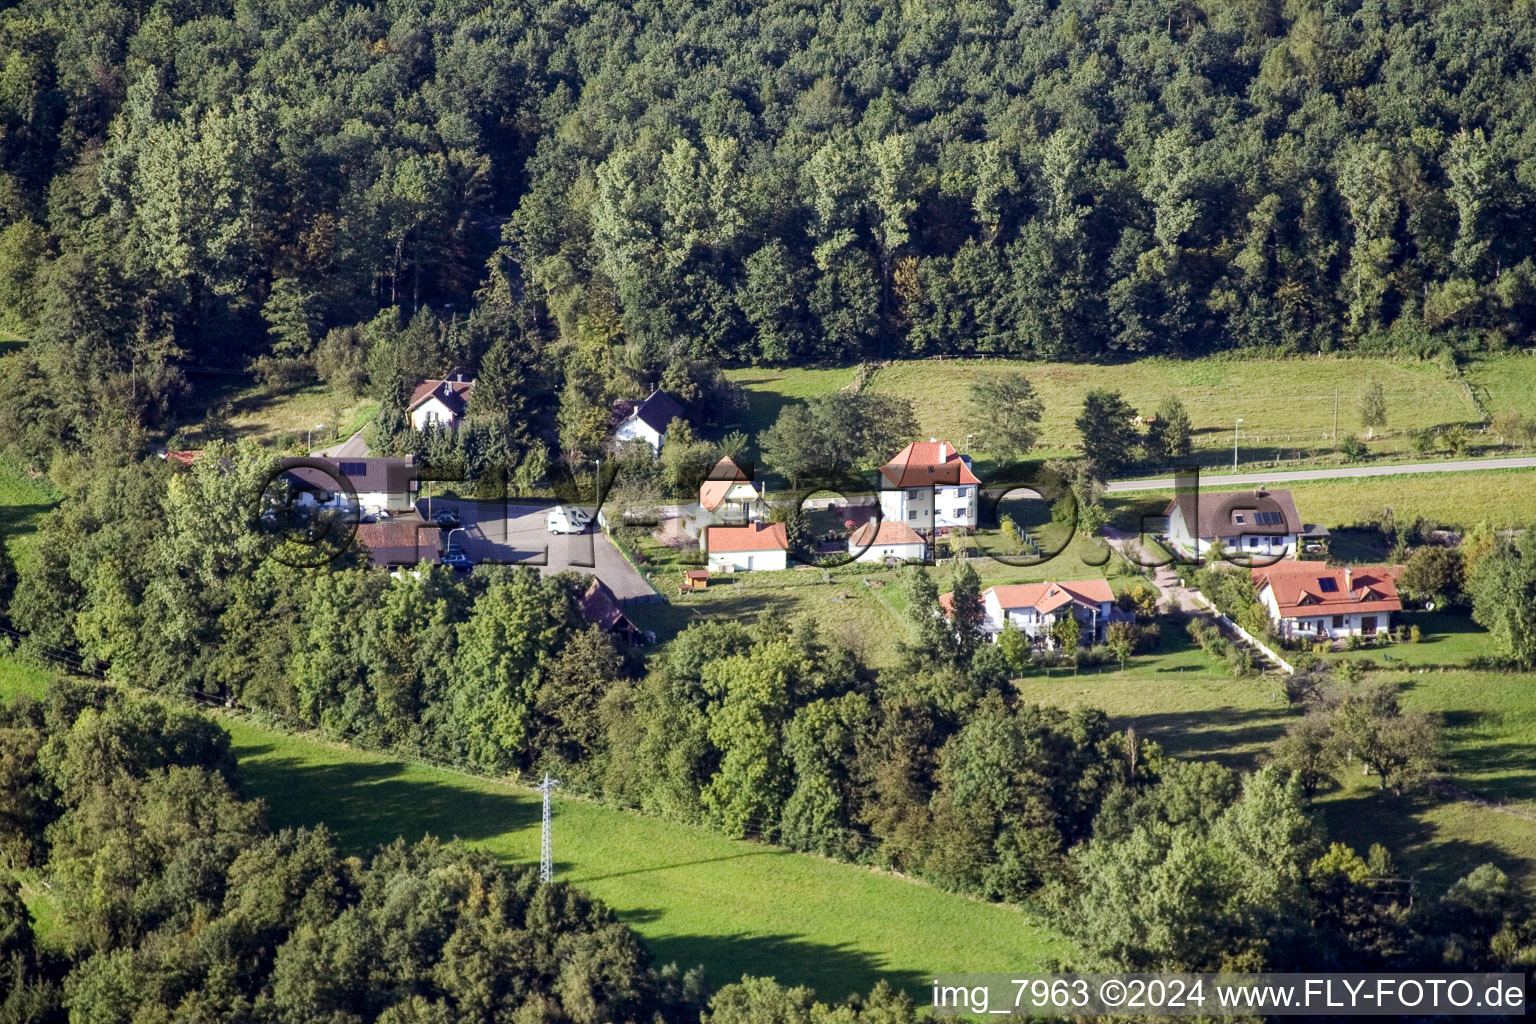 Settlement area in the district Bienwaldmuehle in Scheibenhardt in the state Rhineland-Palatinate